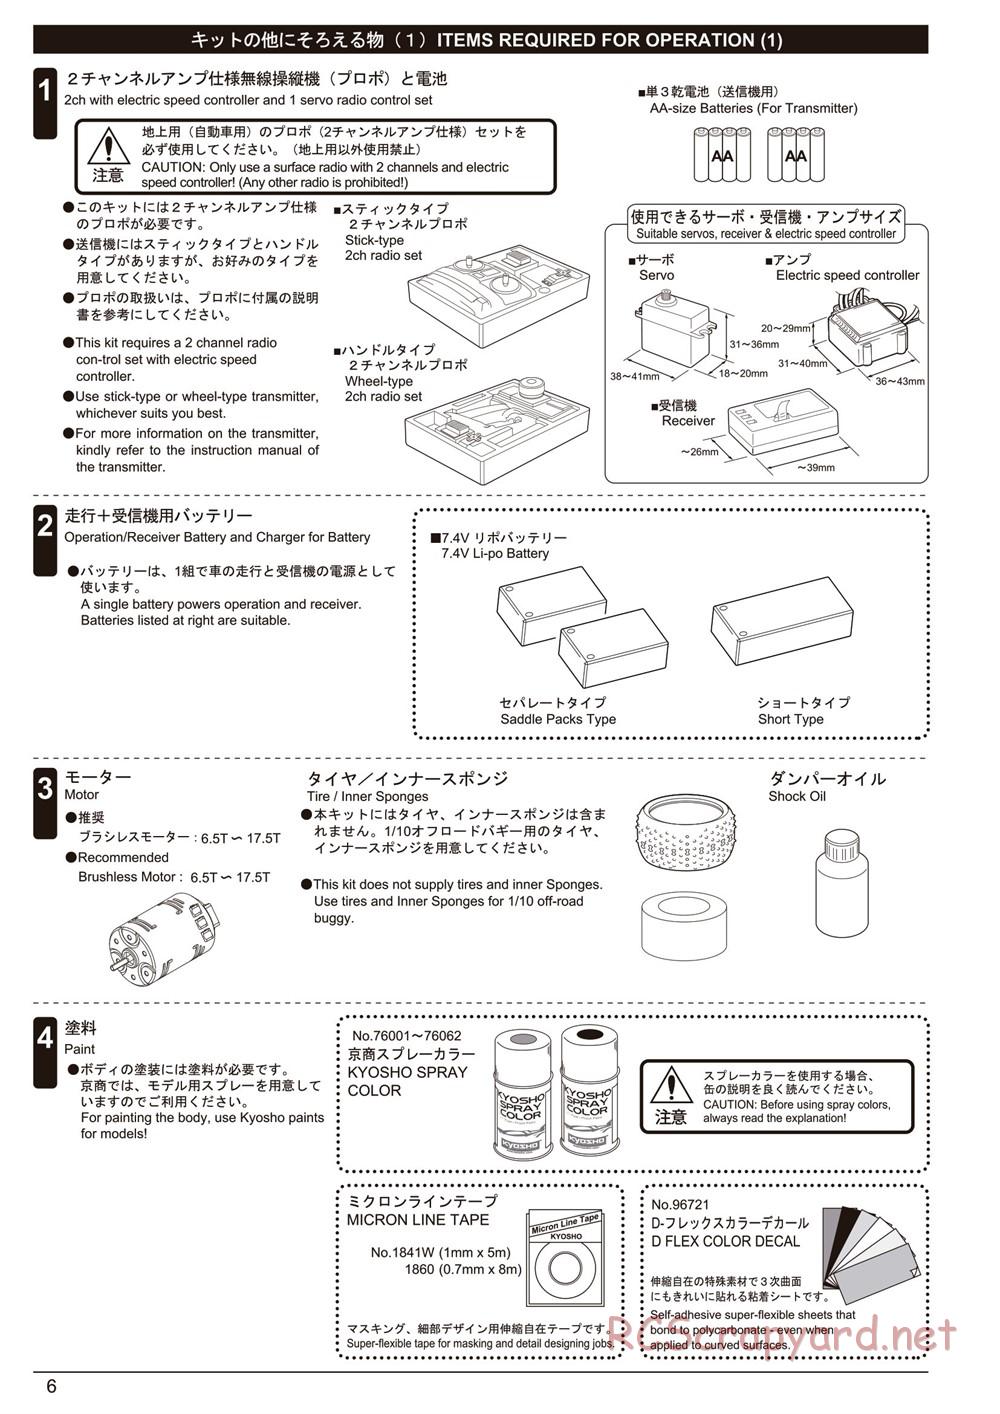 Kyosho - Lazer ZX6.6 - Manual - Page 6